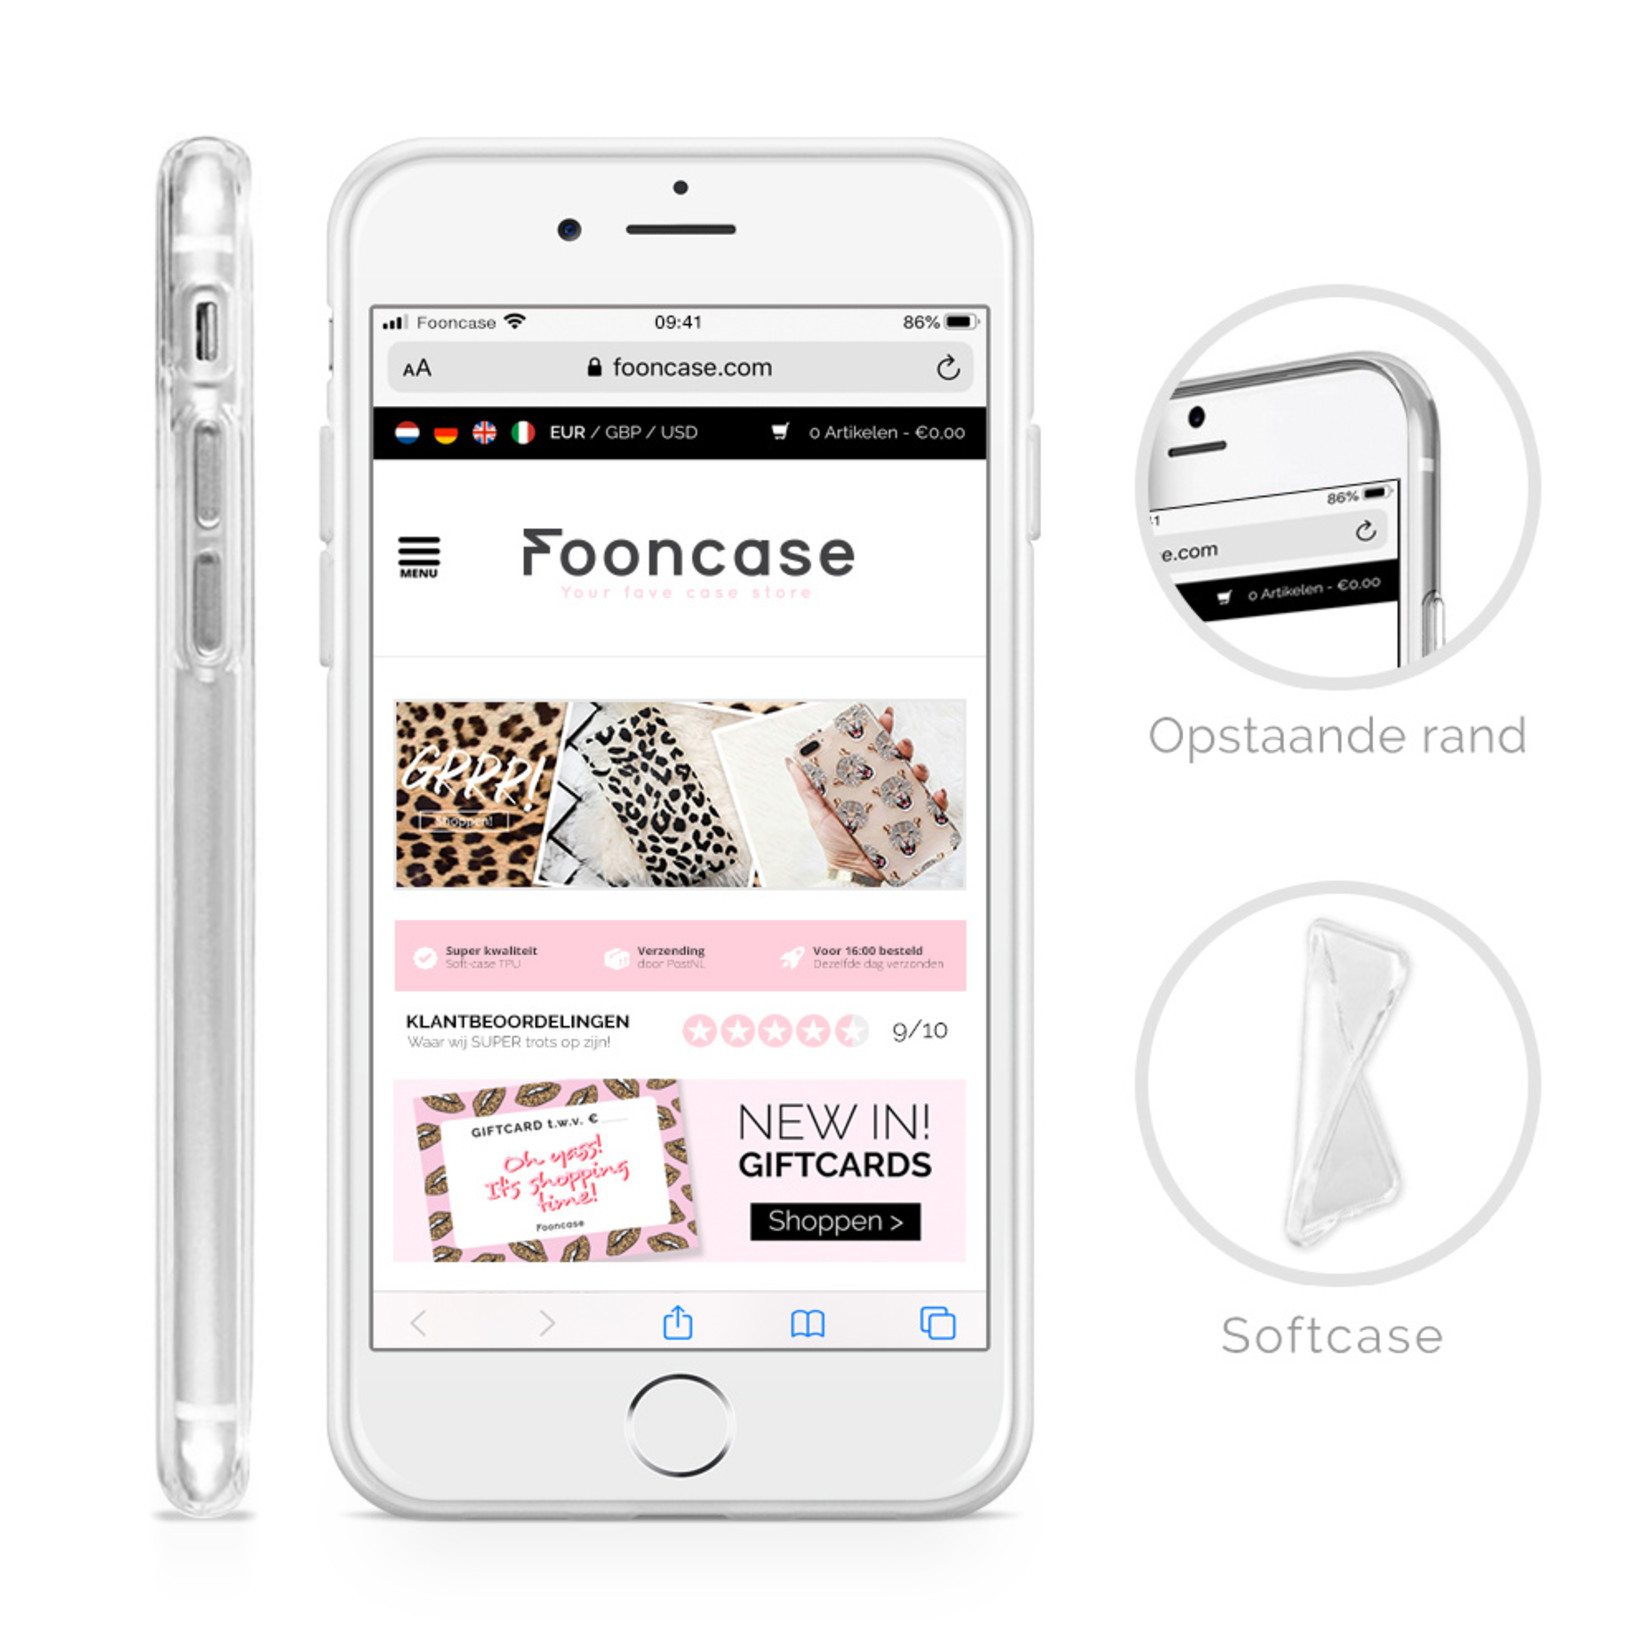 FOONCASE Iphone 7 Case - Banana leaves